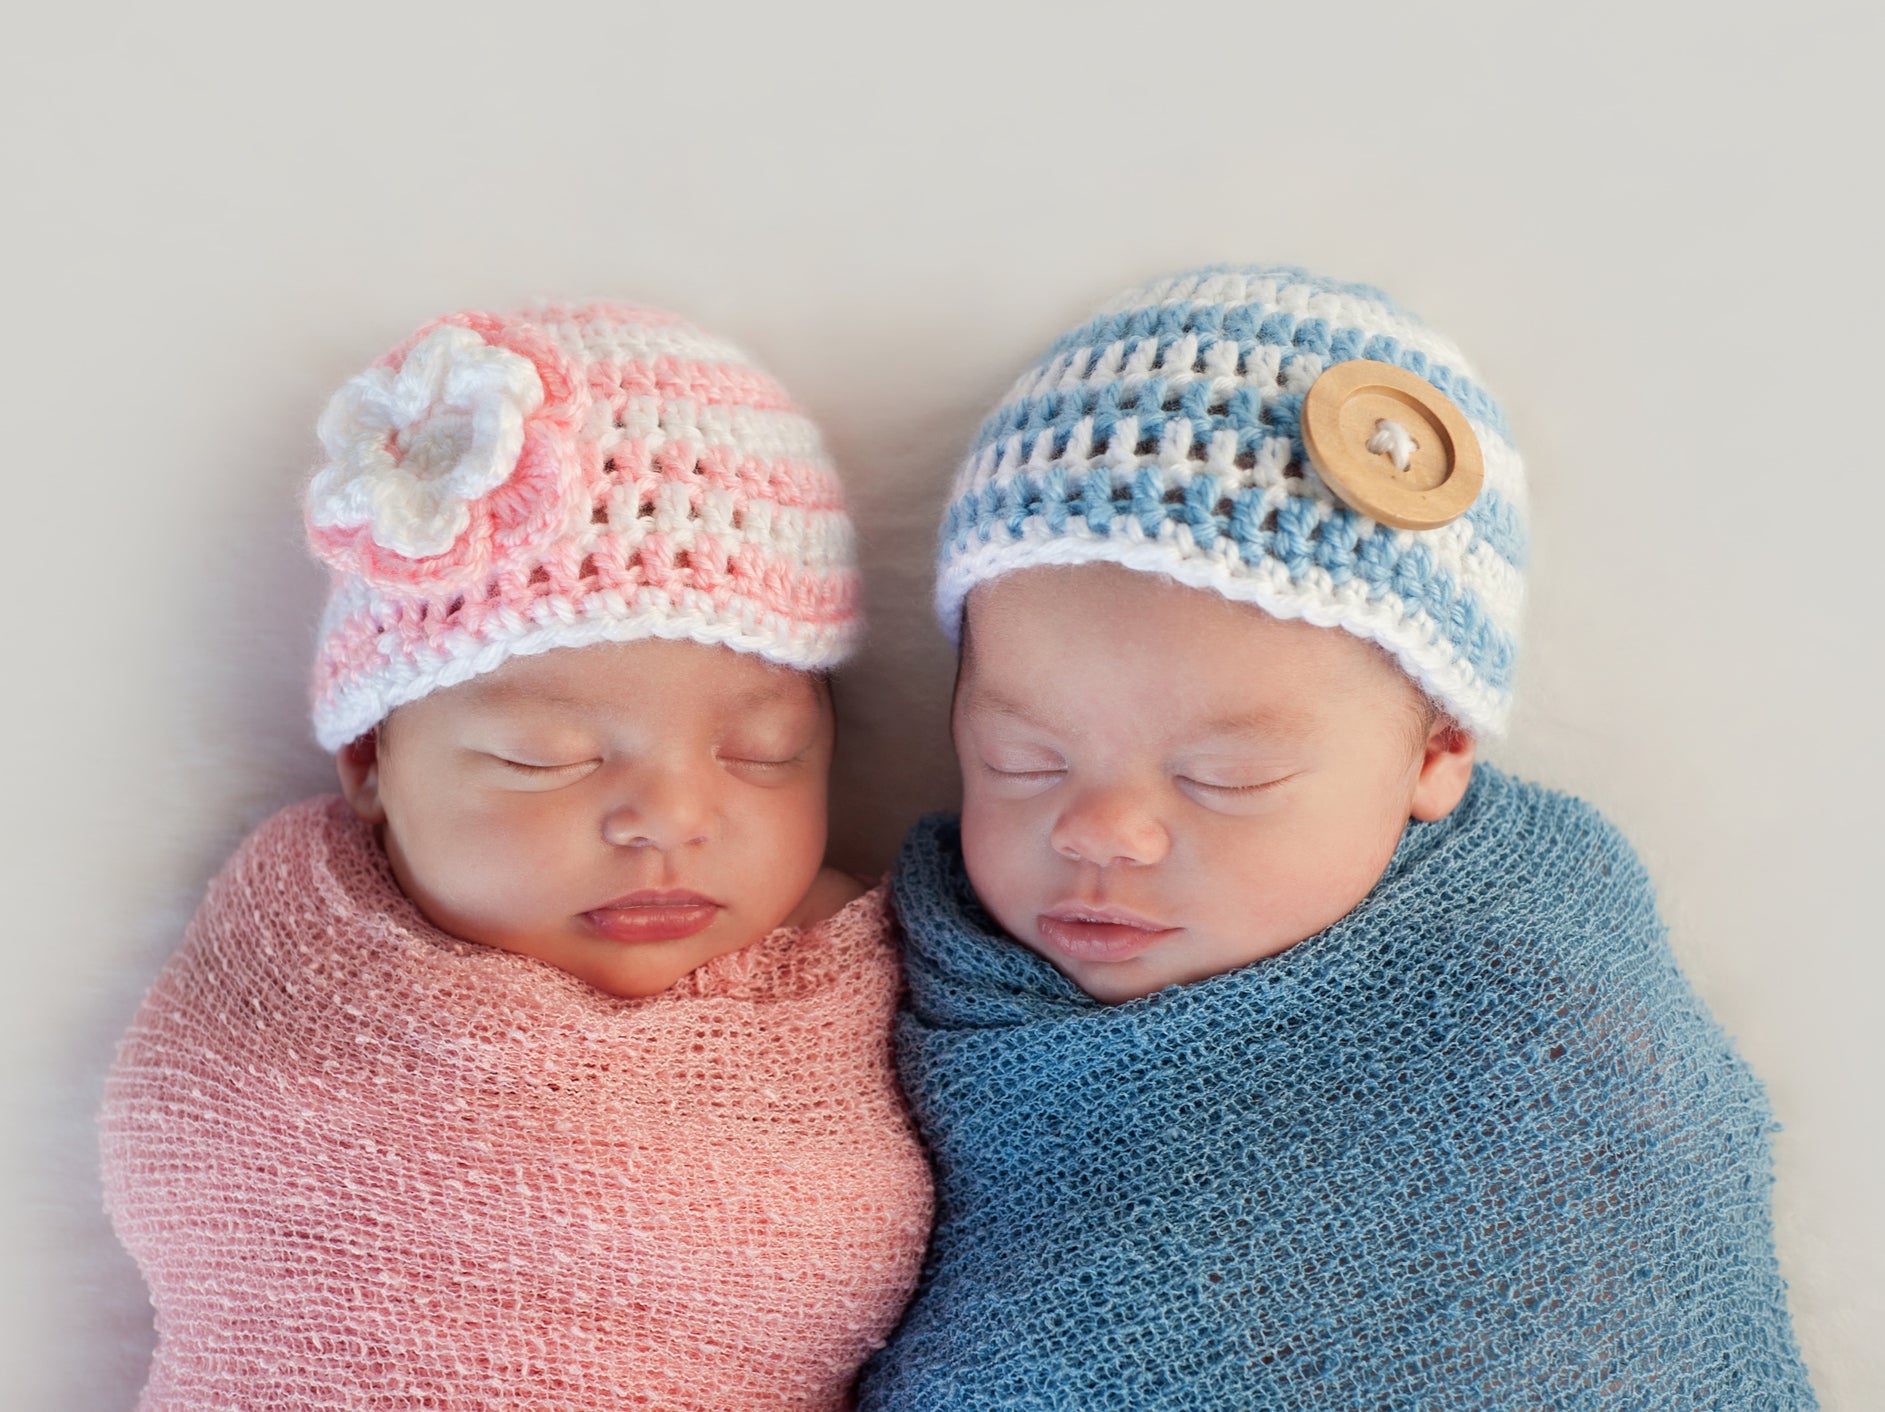 Boy and girl newborn babies